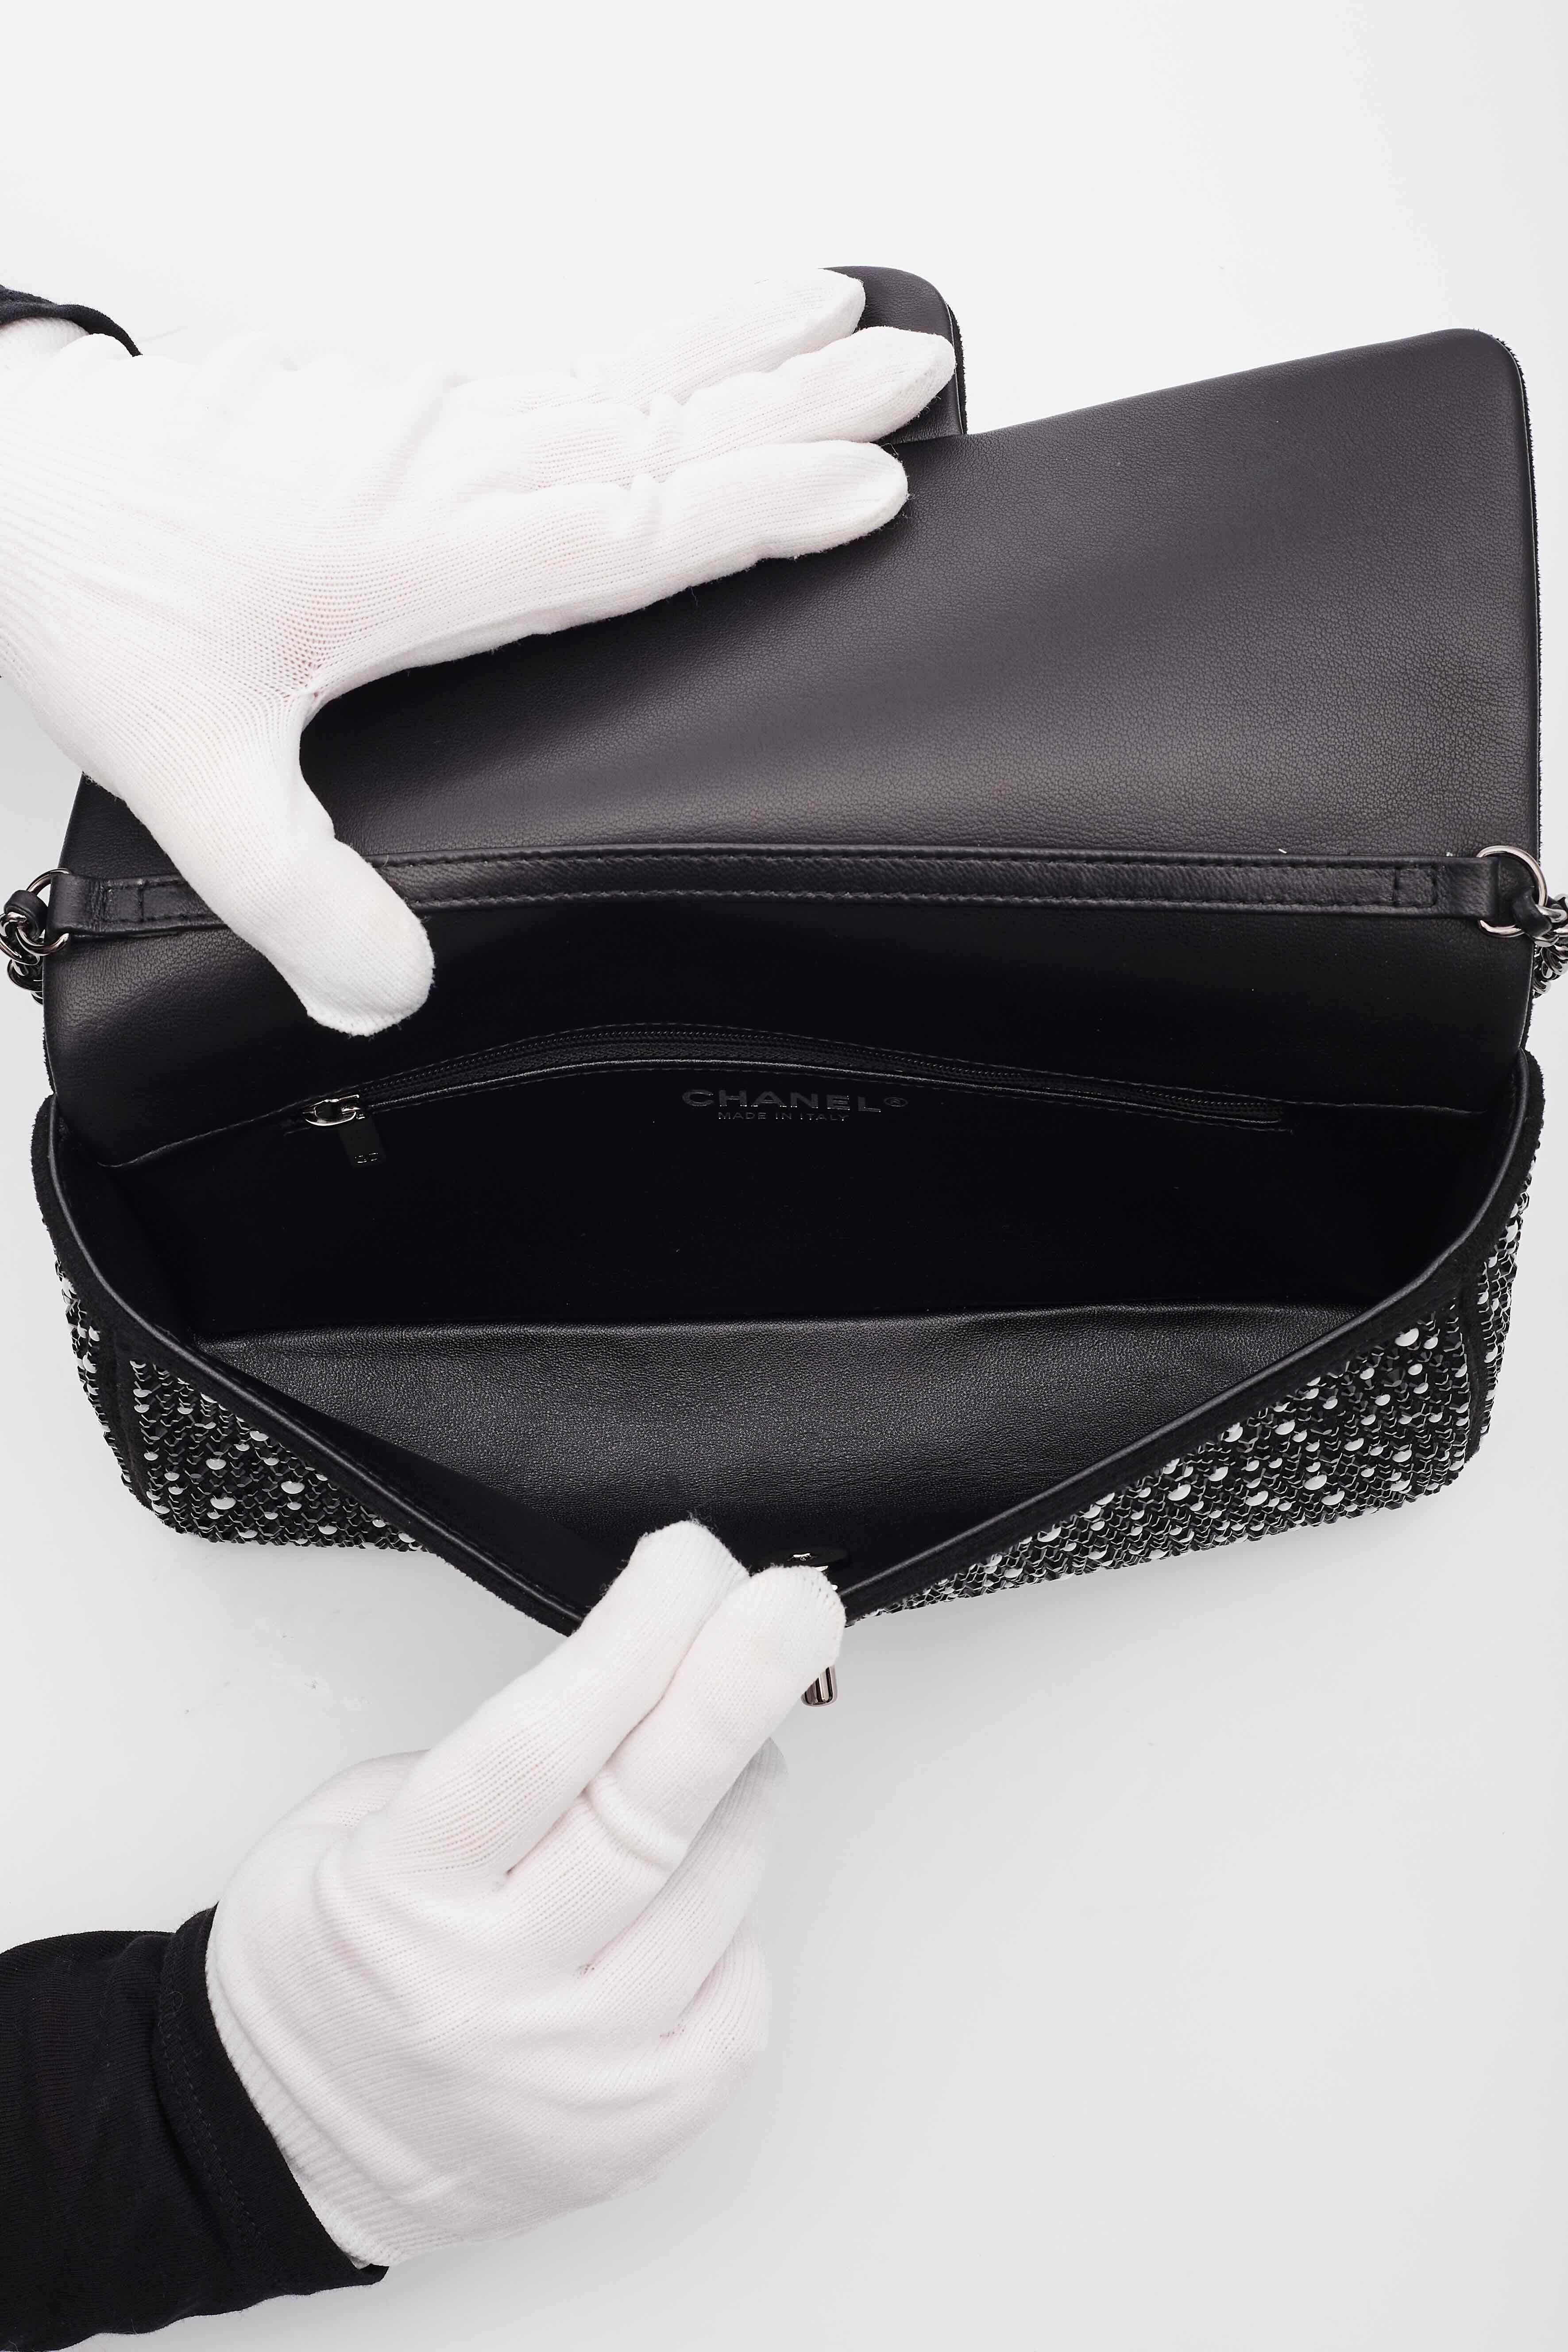 Chanel Strass Crystal Pearls & Ruthenium Metal Shoulder Bag Black & White 3